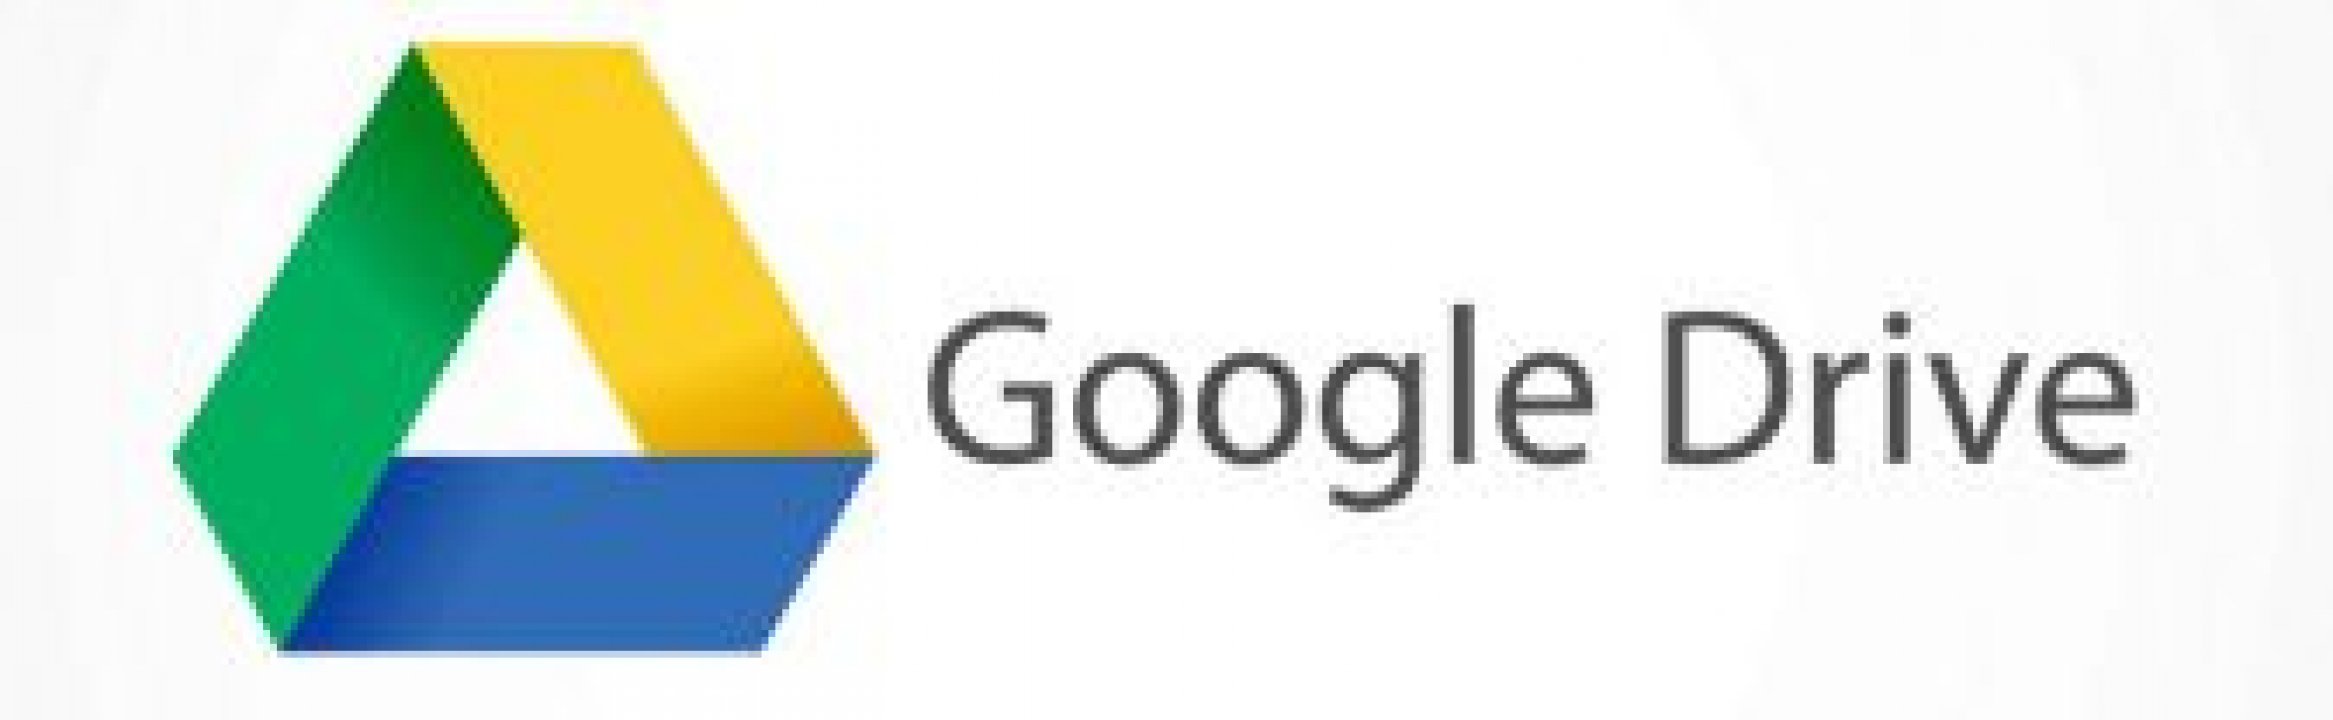 Google Drive логотип PNG